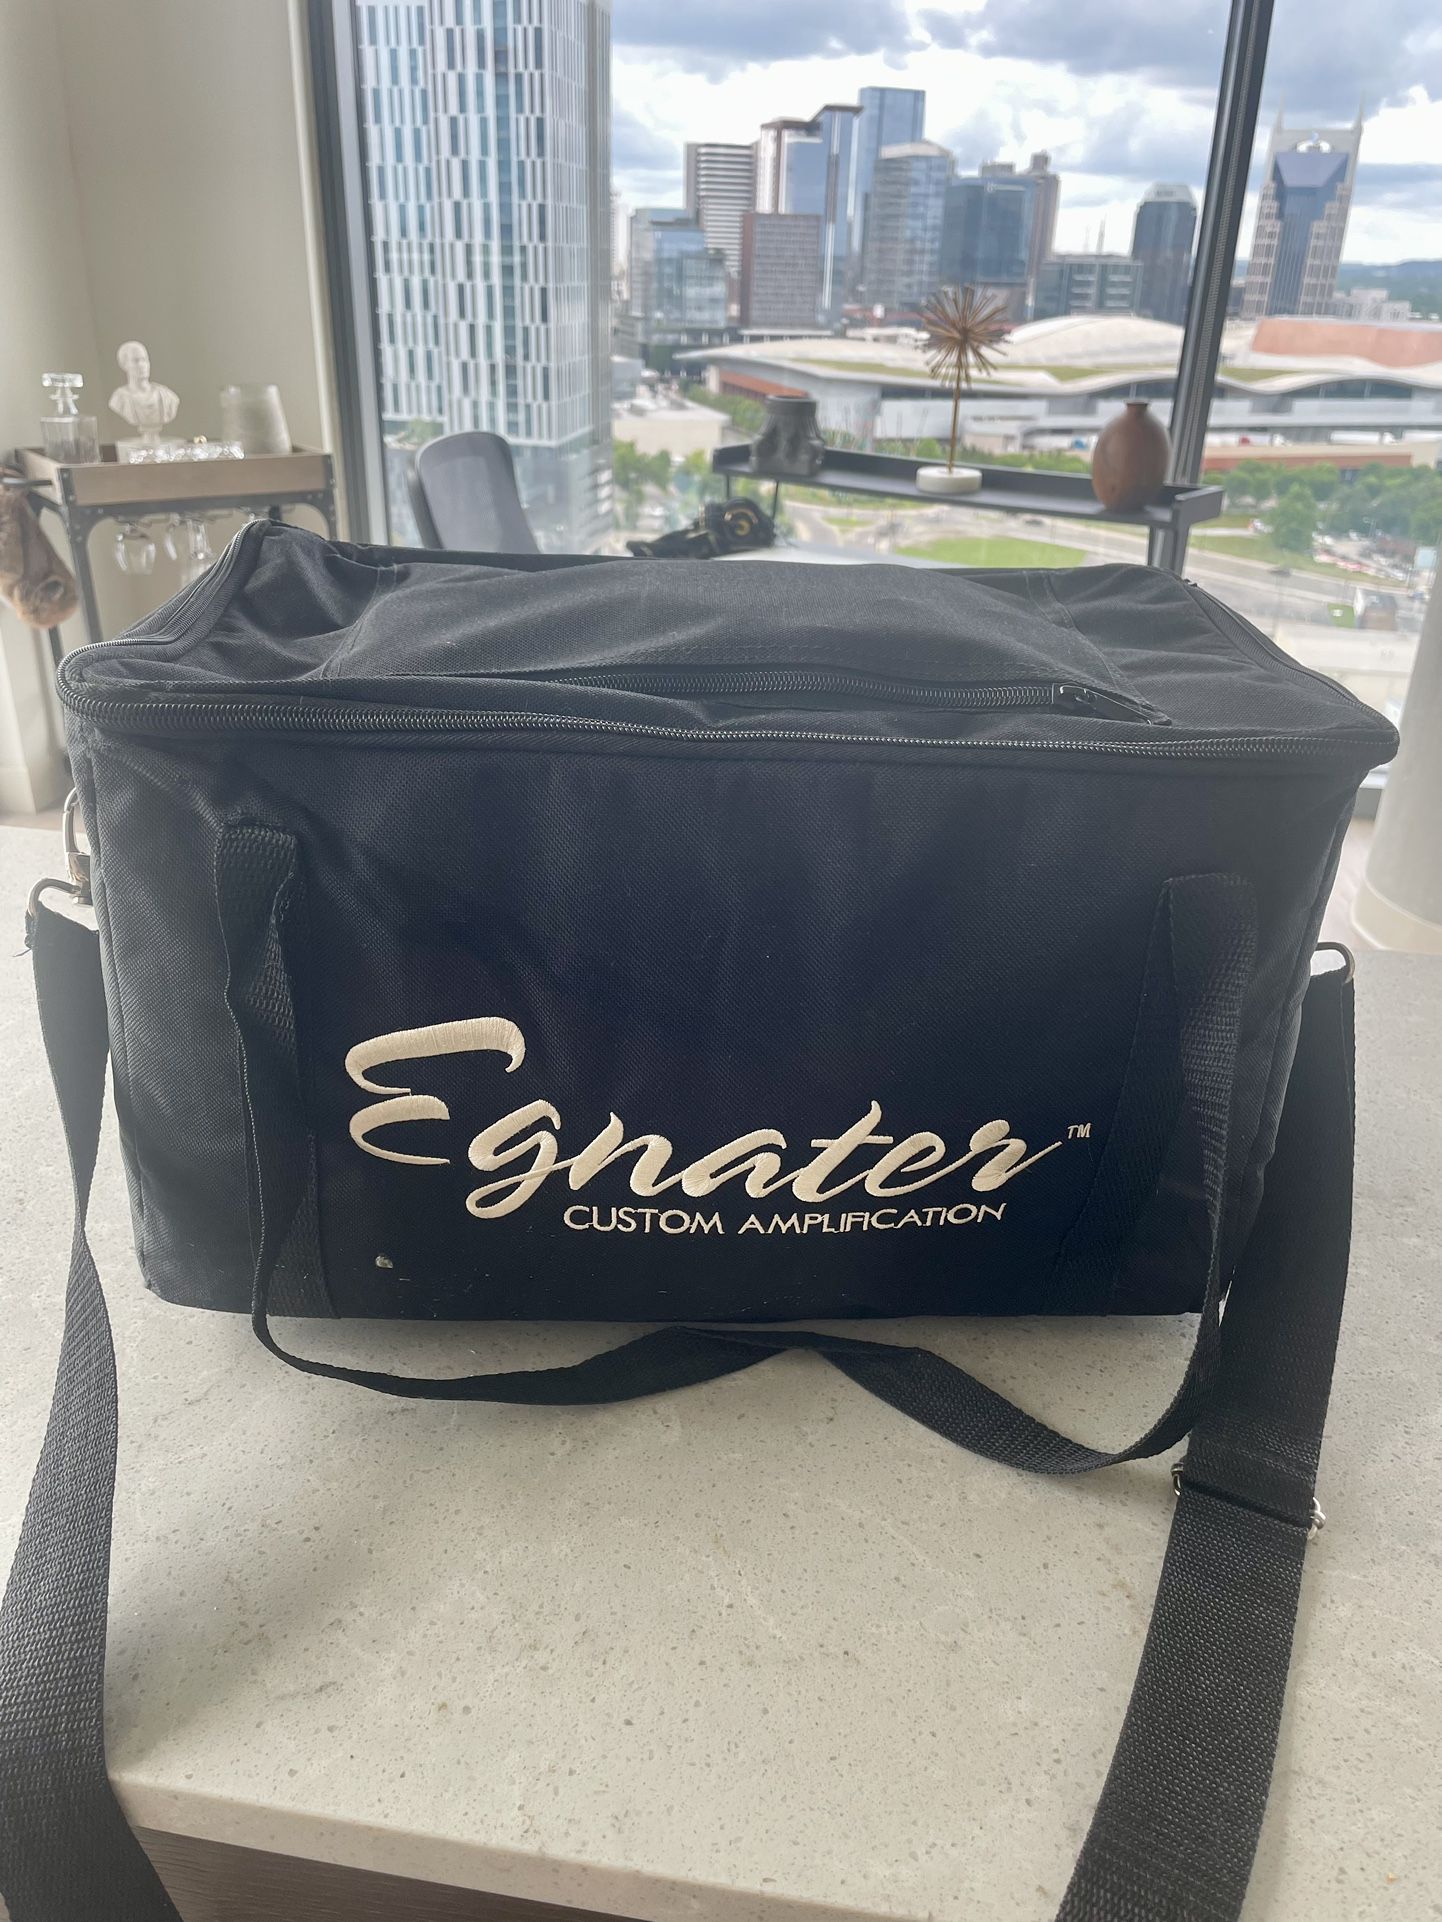 Engnater Amp Head Case/Bag